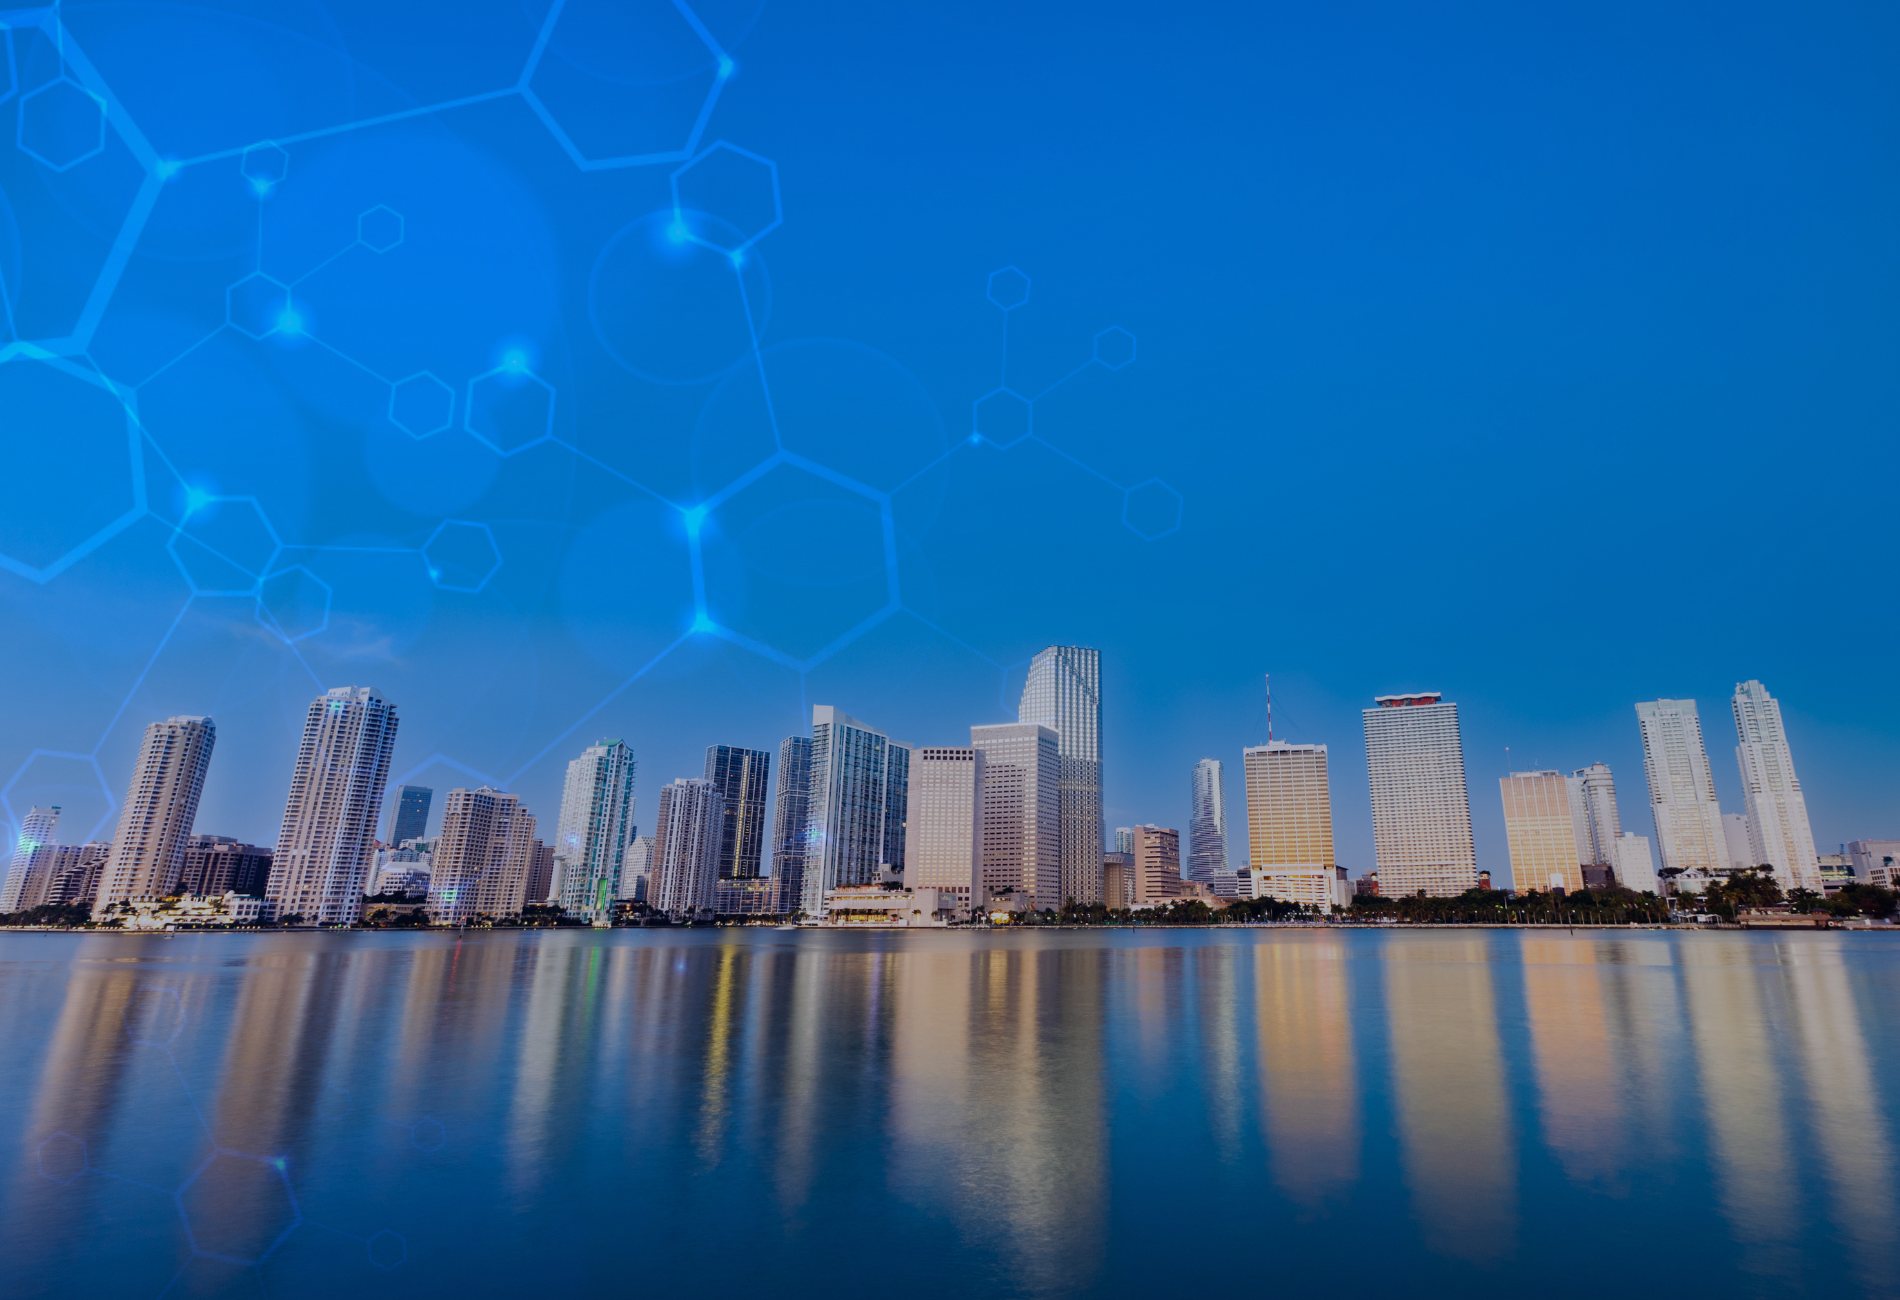 Miami skyline and technology